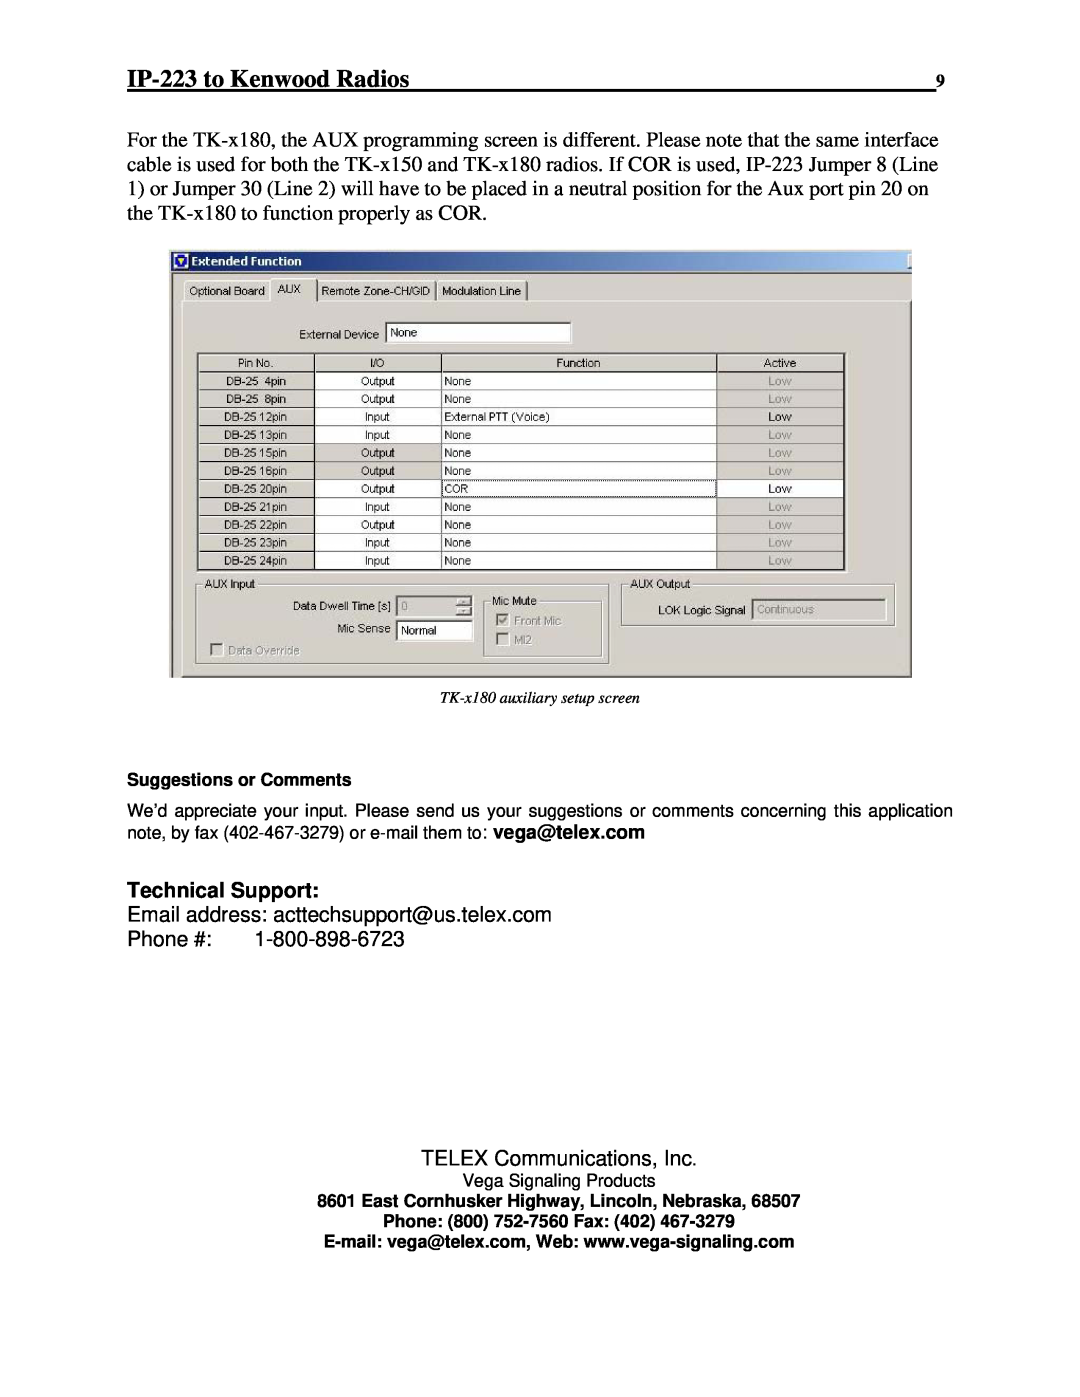 Telex 80 manual IP-223to Kenwood Radios, Technical Support, Phone # TELEX Communications, Inc 